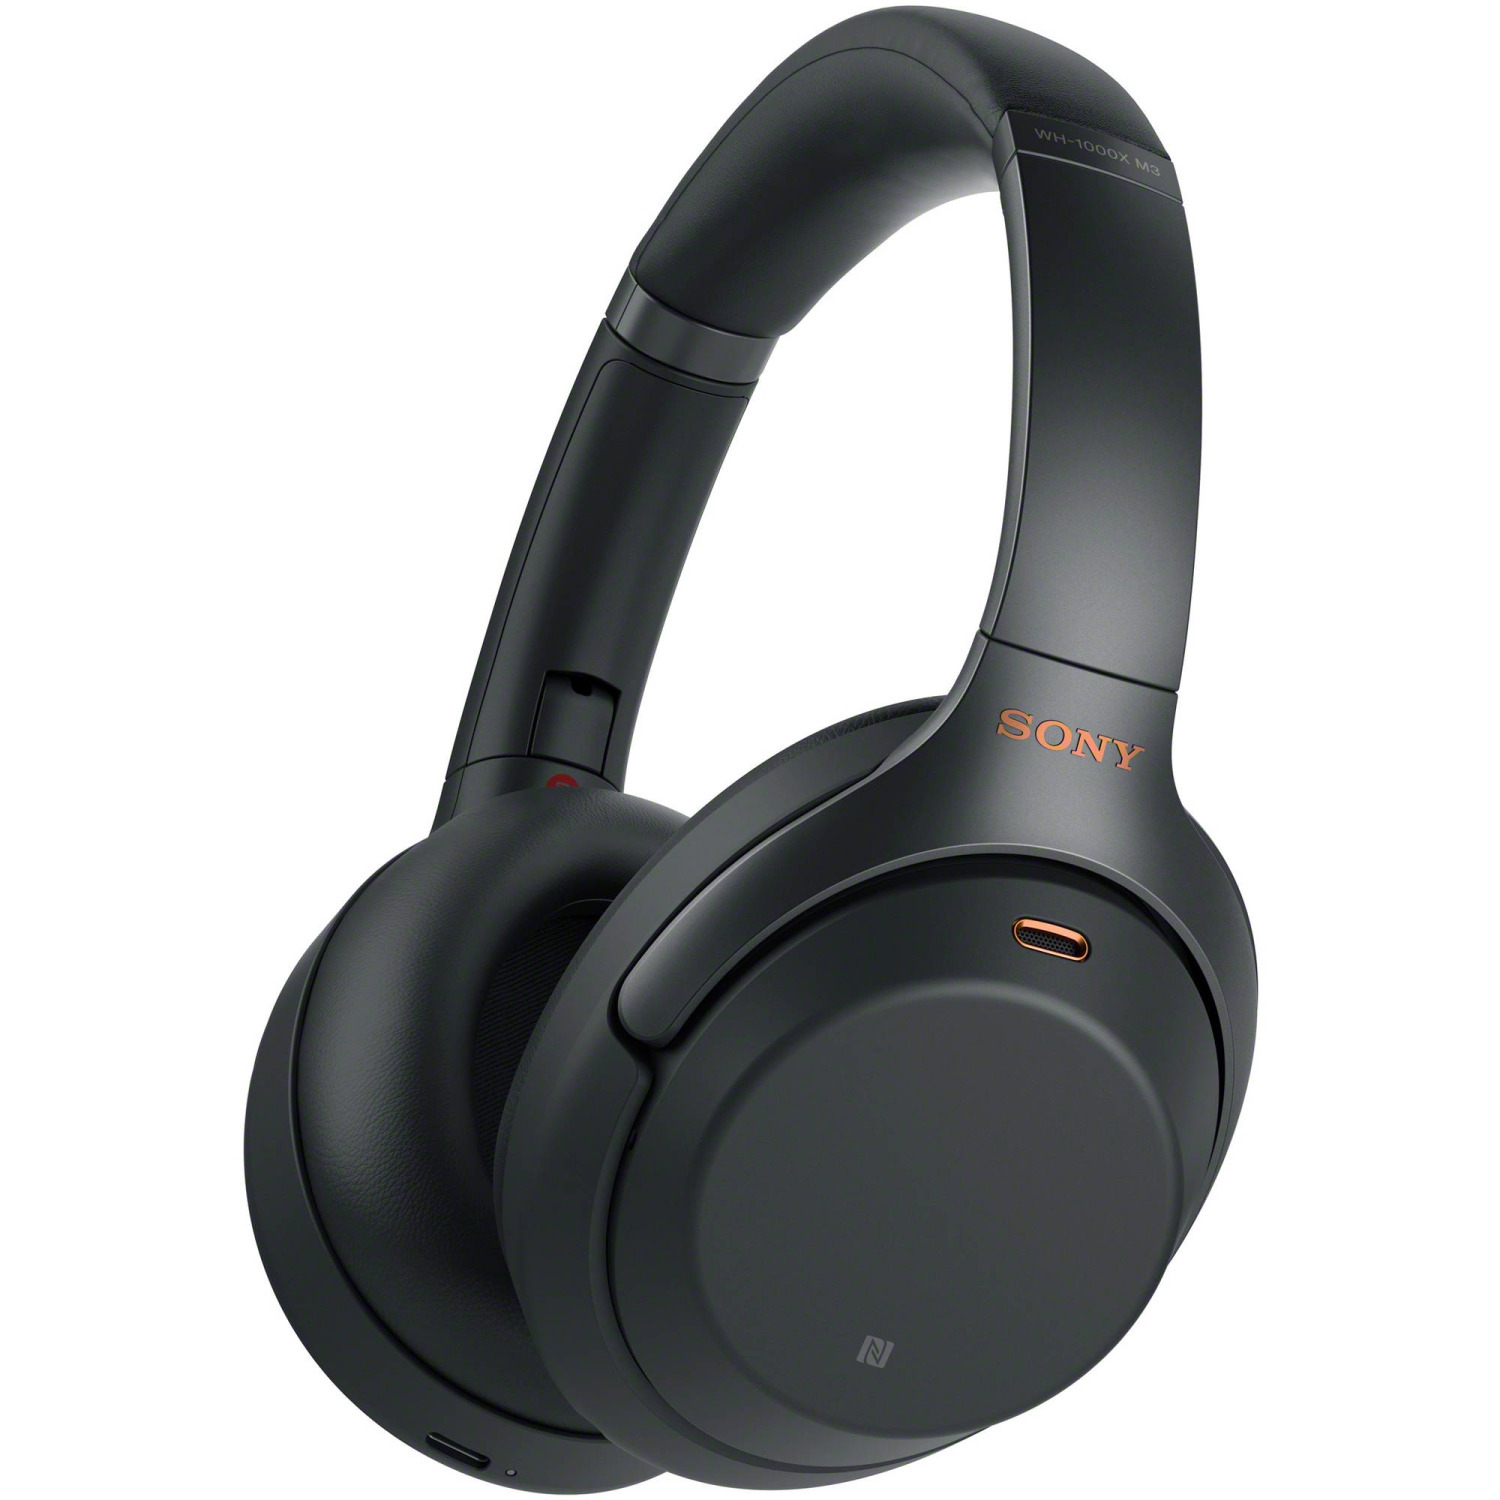 Sony WH-1000XM3 Wireless Noise-Canceling Over-Ear Headphones - Black (Open Box)